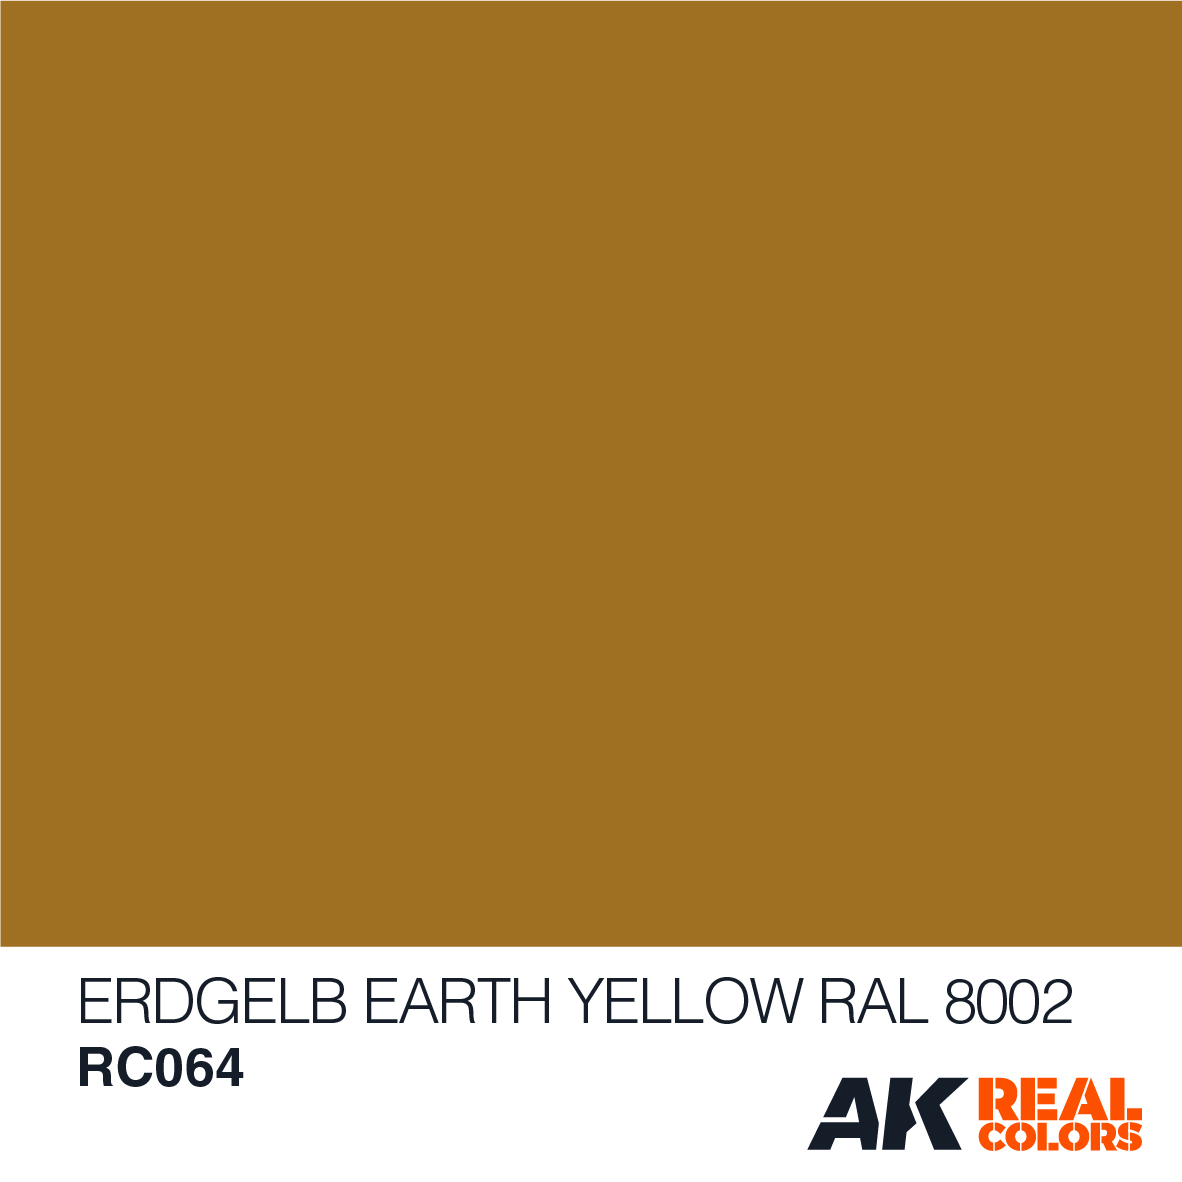 Erdgelb – Earth Yellow RAL 8002